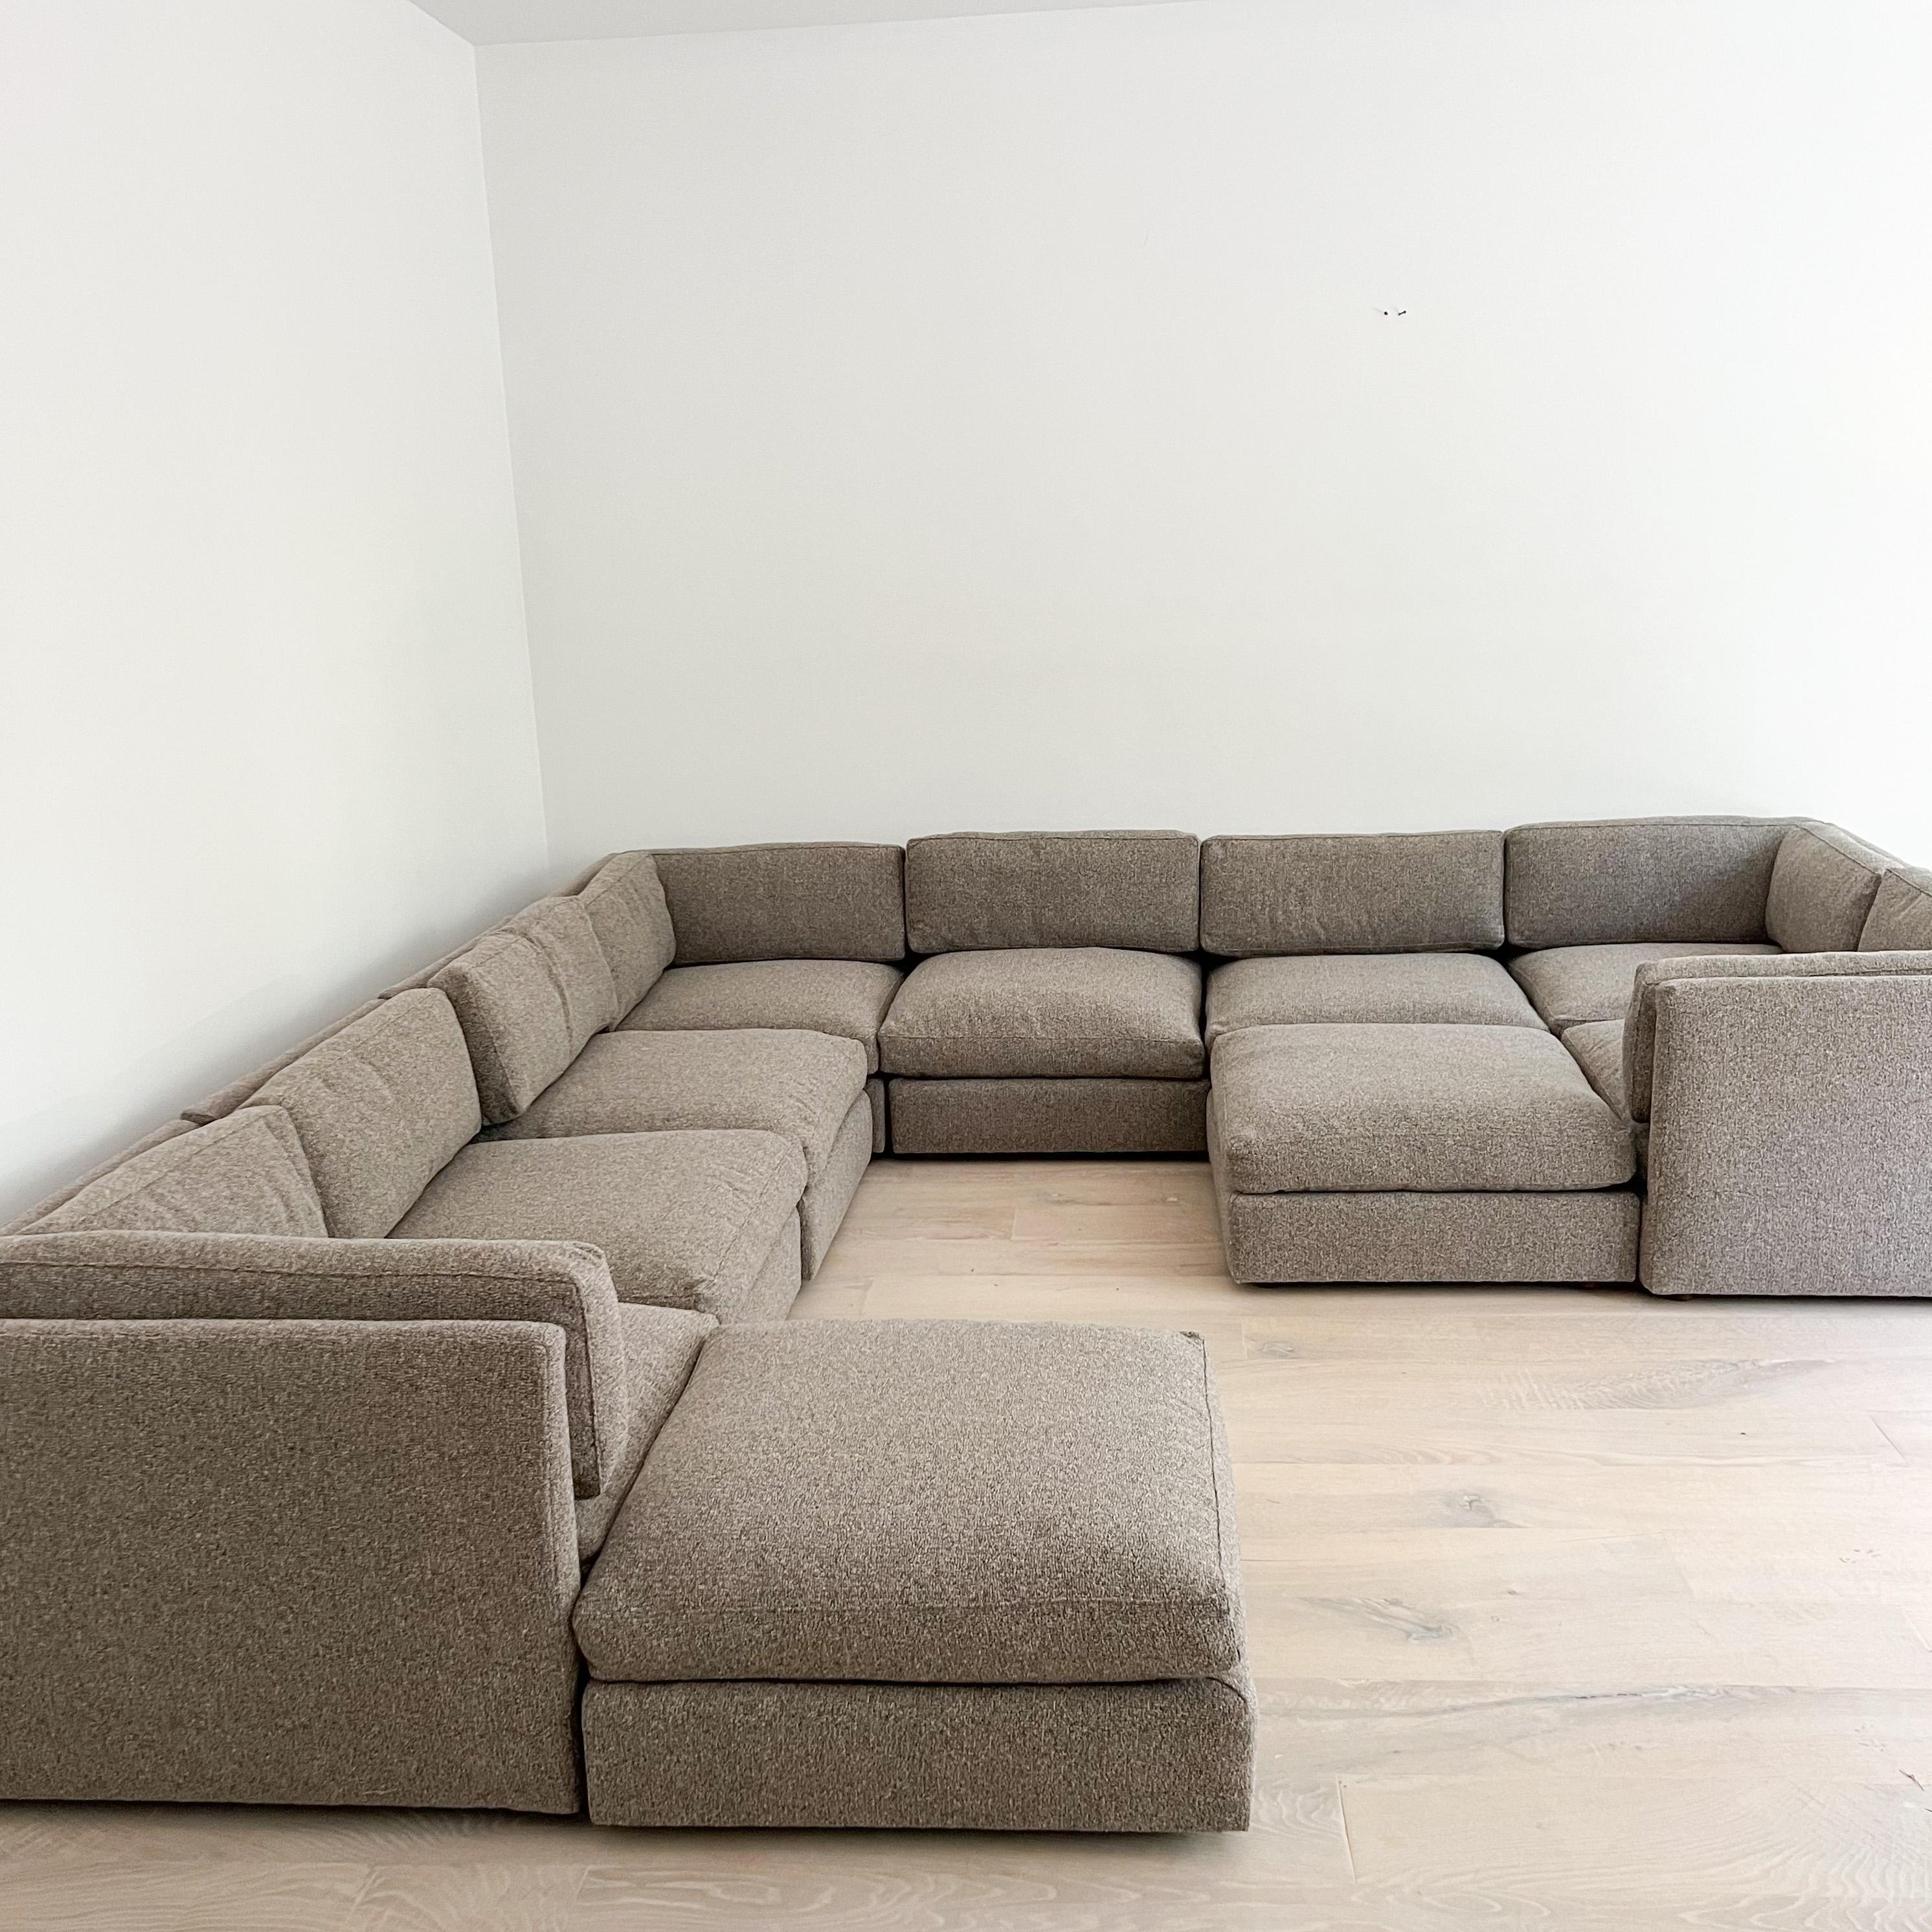 Milo Baughman Attributed 10 Piece Modular Sectional Sofa, New Upholstery 8